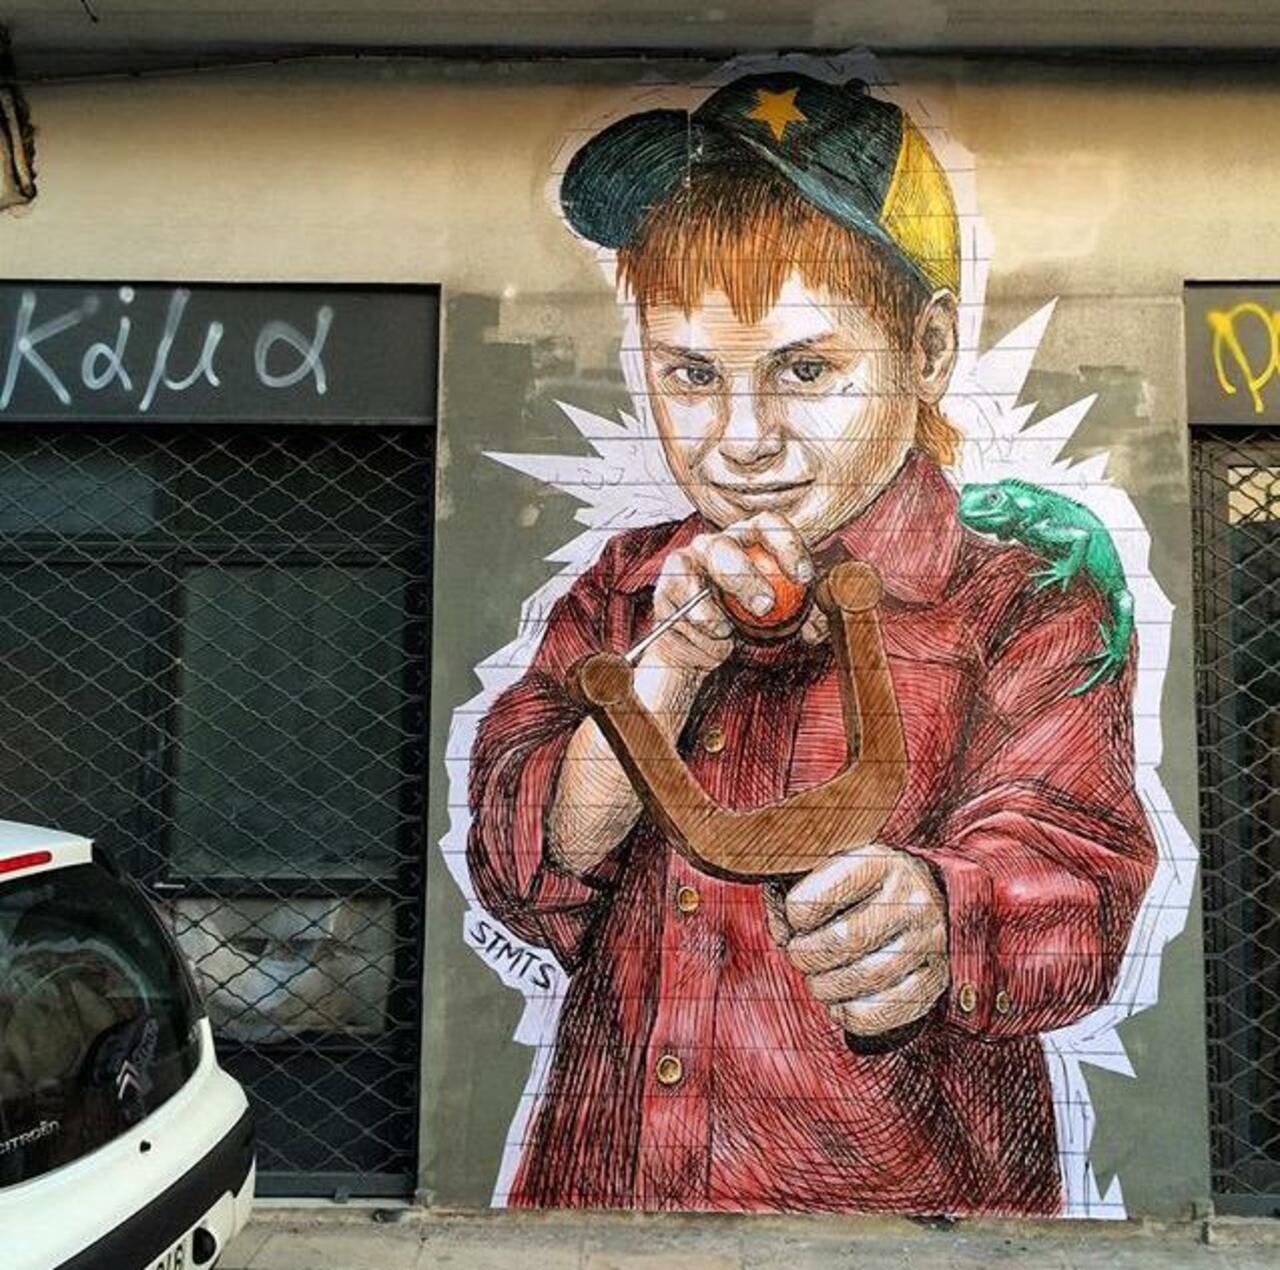 Street Art by STMTS in Athens

#art #graffiti #mural #streetart http://t.co/9e2FVaFJZl googlestreetart chinatoniq